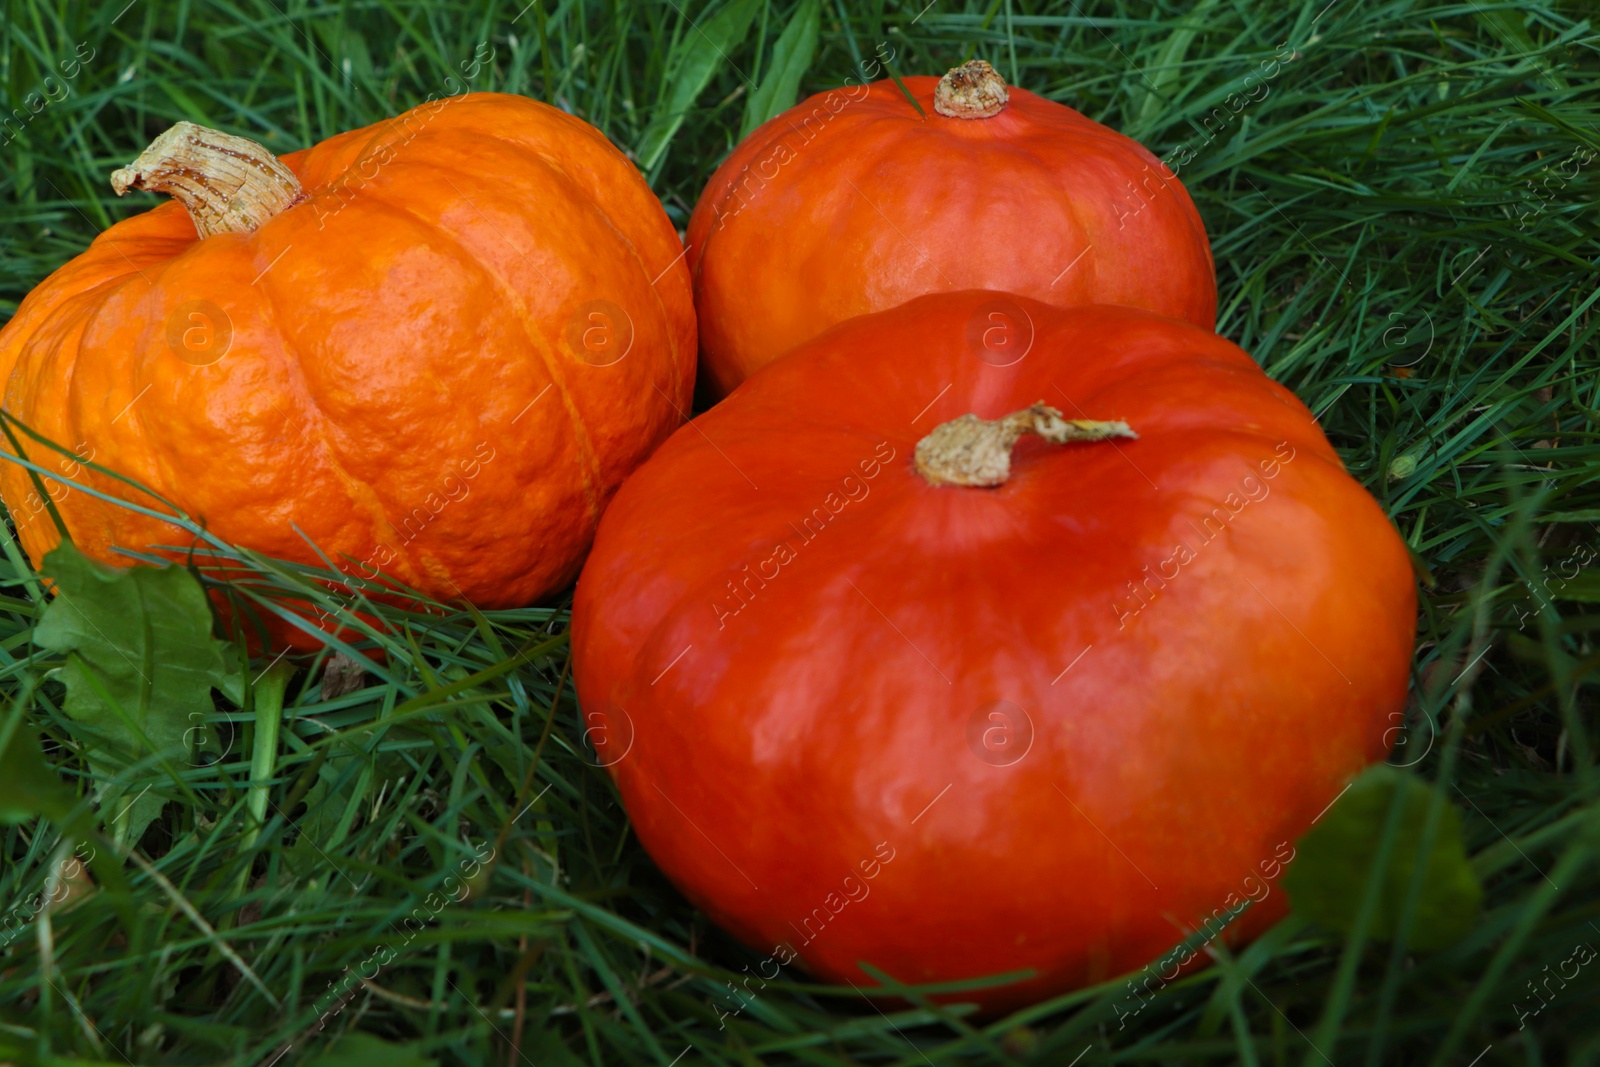 Photo of Whole ripe orange pumpkins among green grass outdoors, closeup